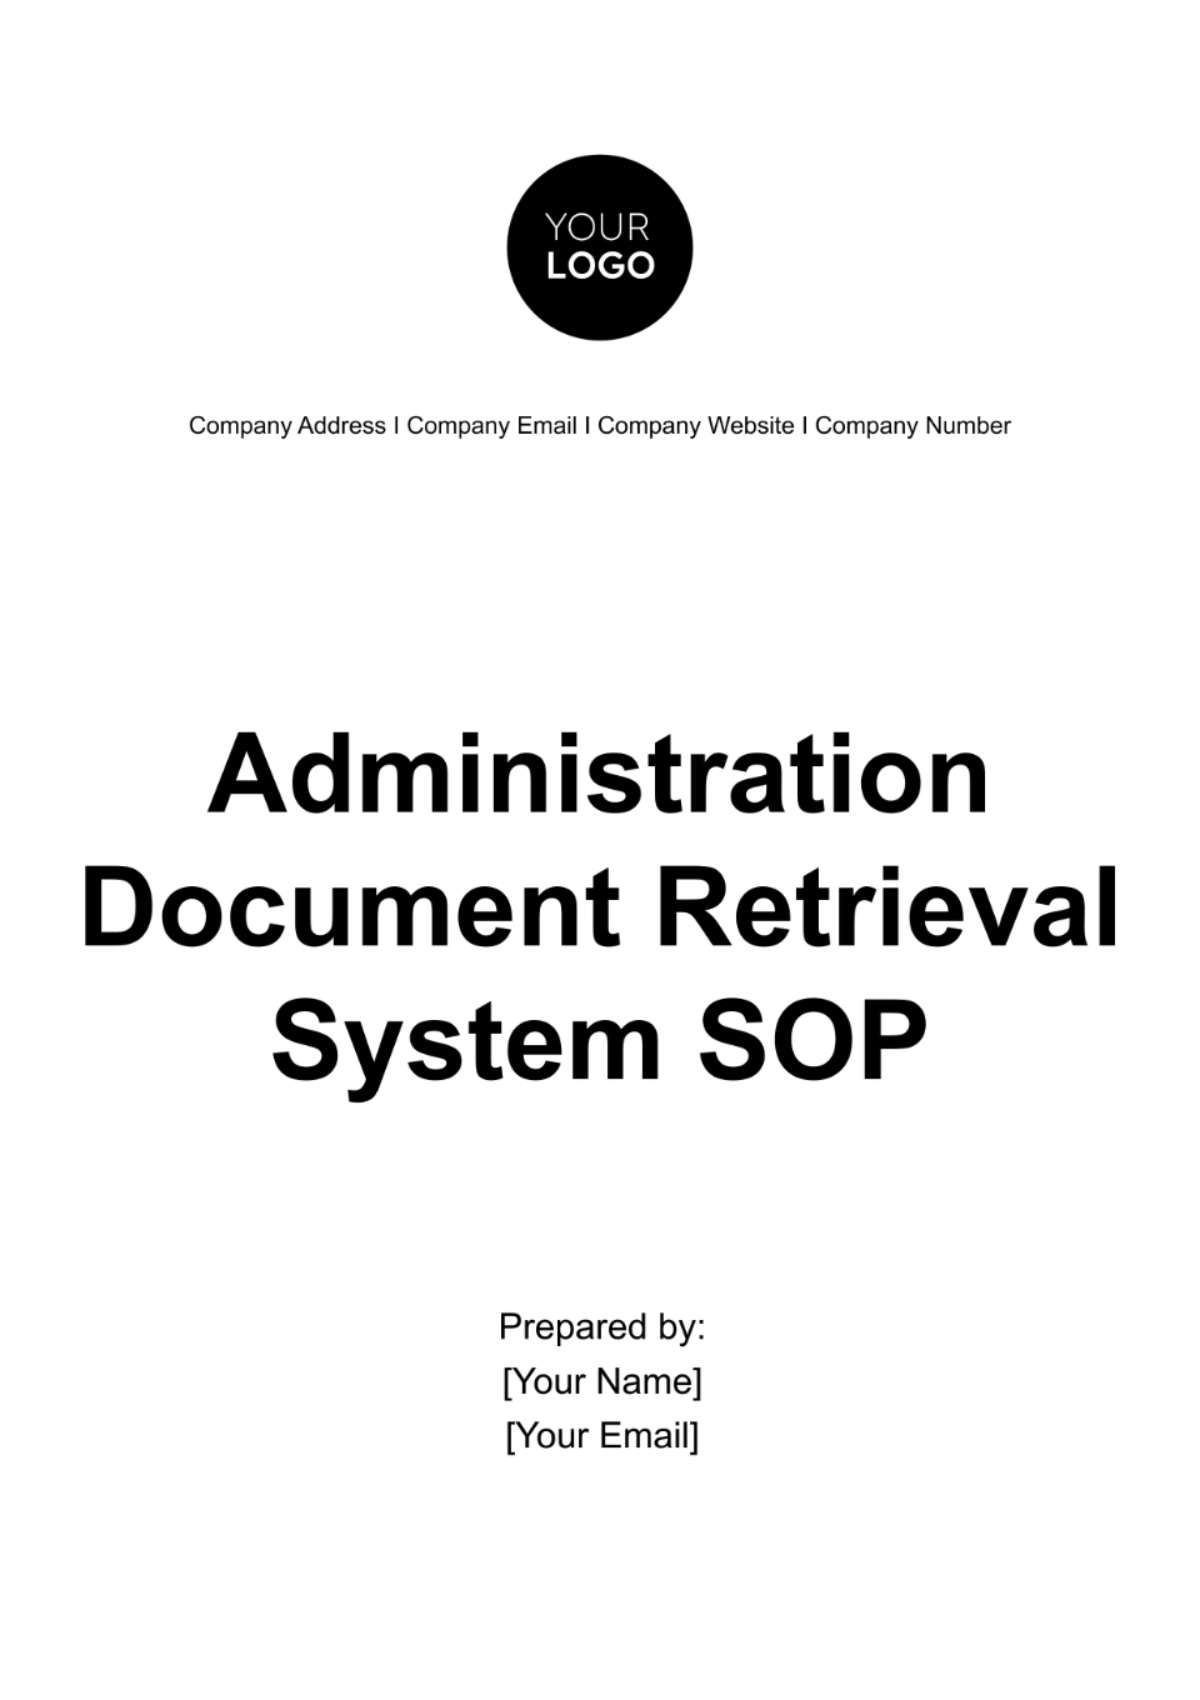 Administration Document Retrieval System SOP Template